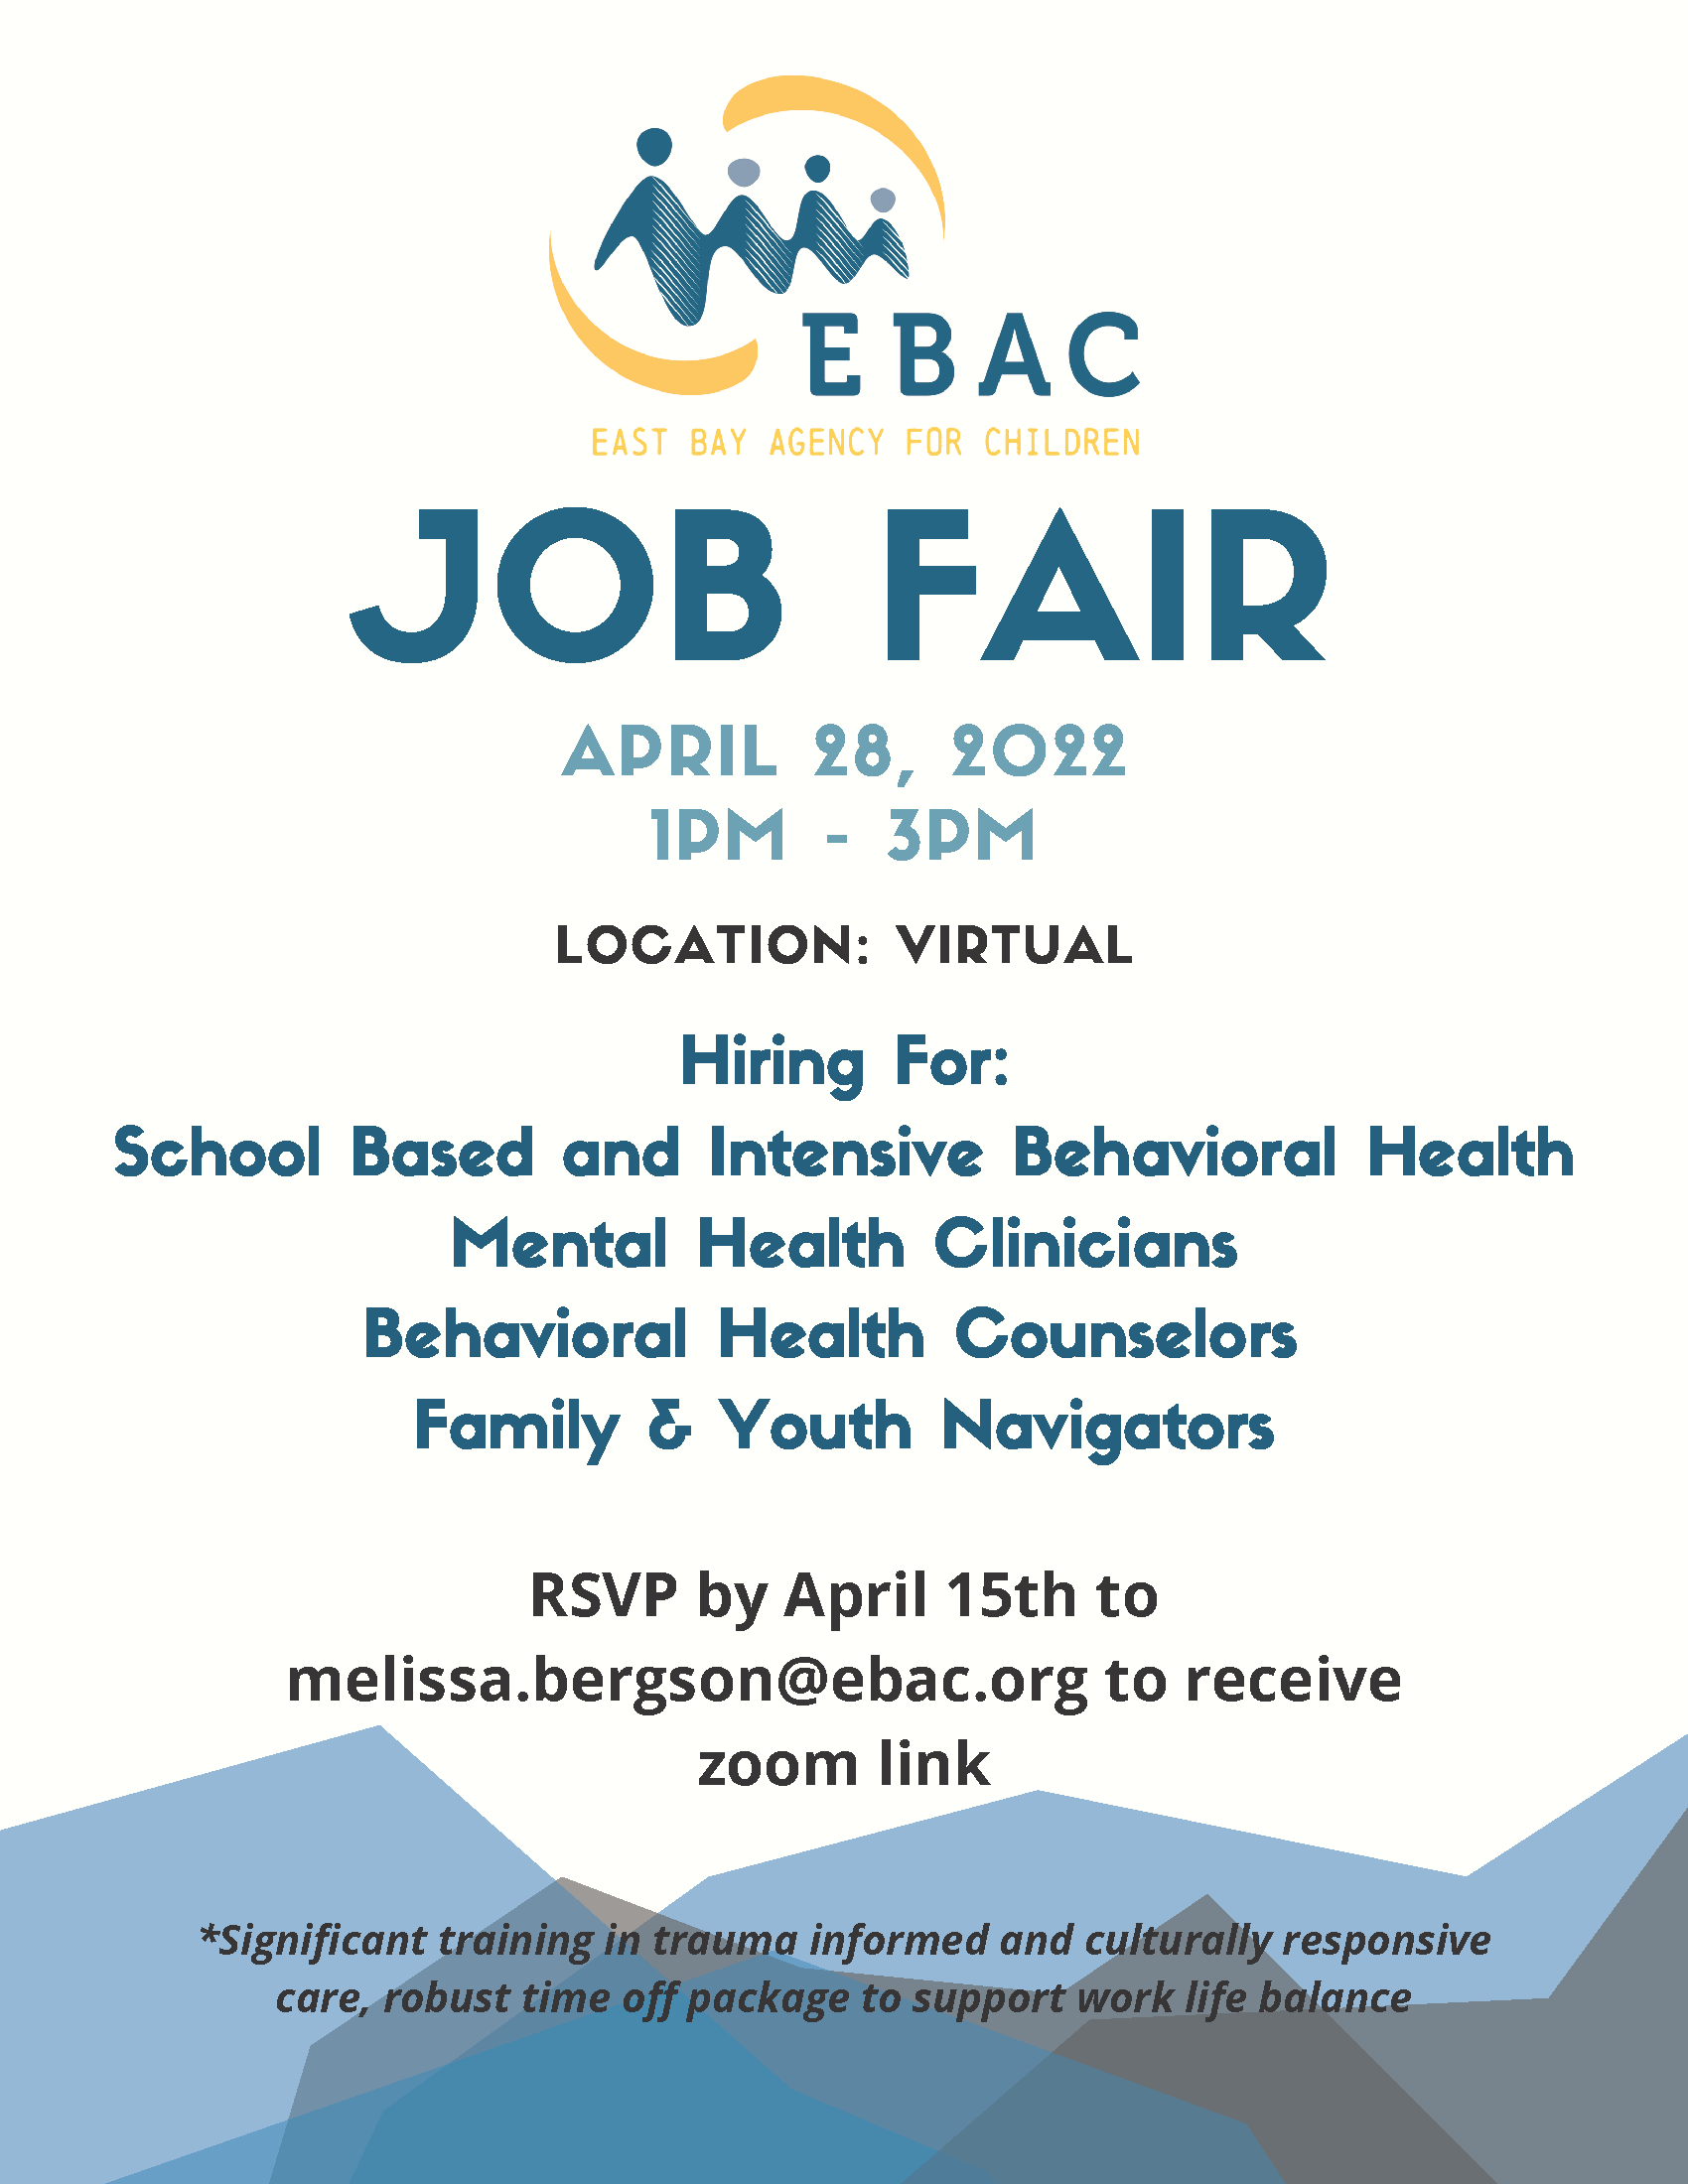 Flyer with details regarding Job Fair with East Bay Agency for Children including RSVP information